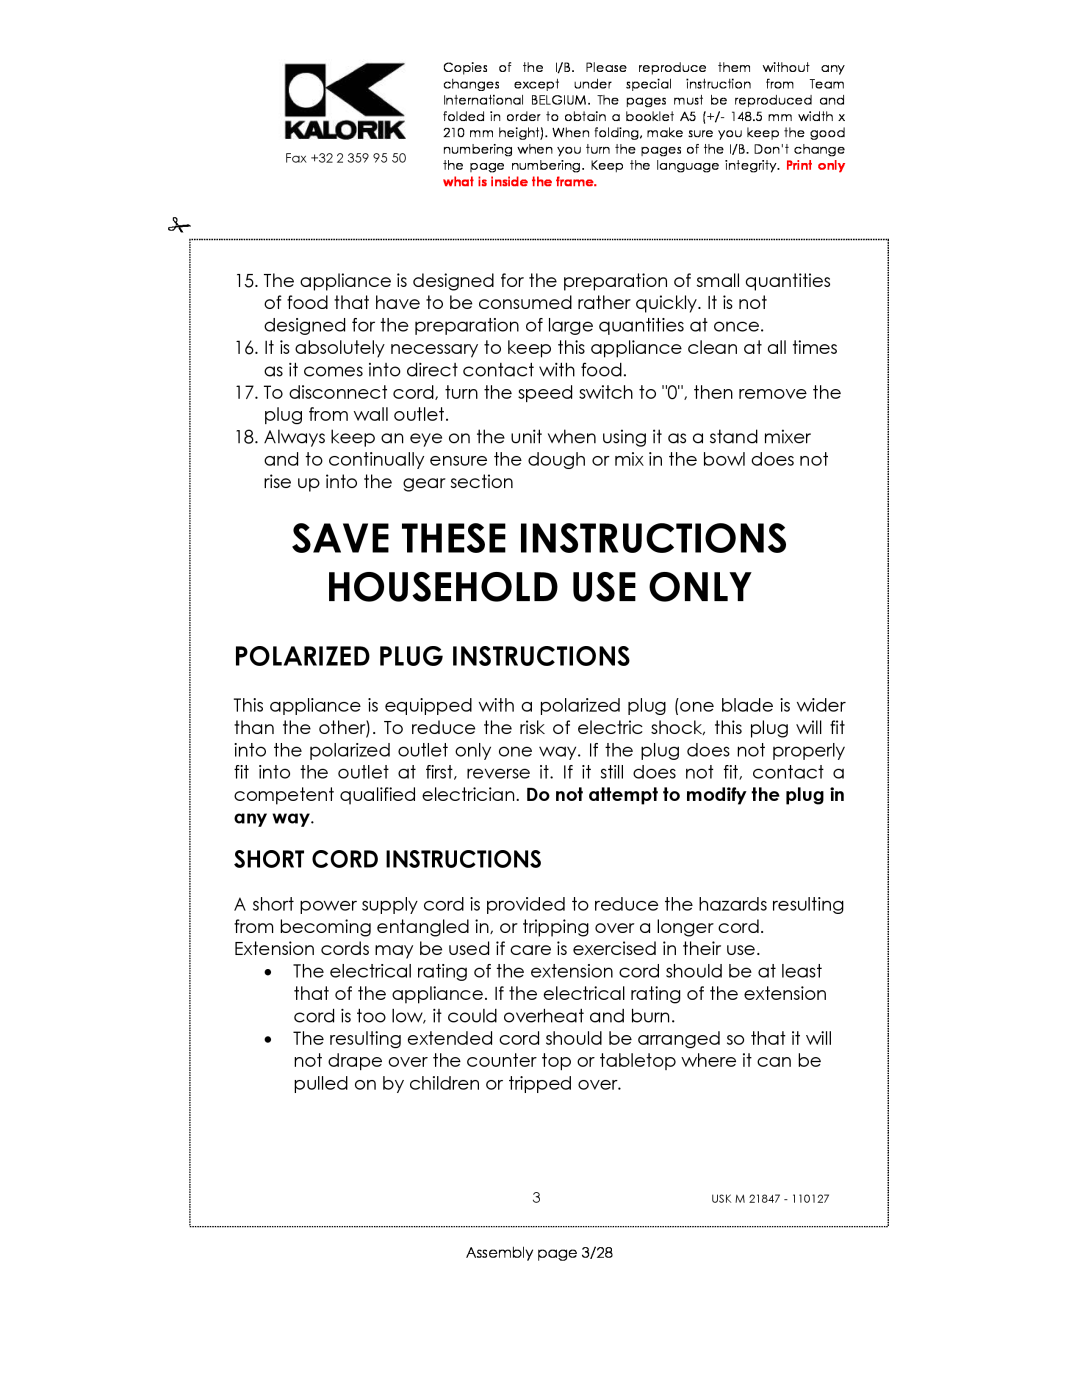 Kalorik USK M 21847 manual Save These Instructions Household Use Only, Polarized Plug Instructions, Short Cord Instructions 